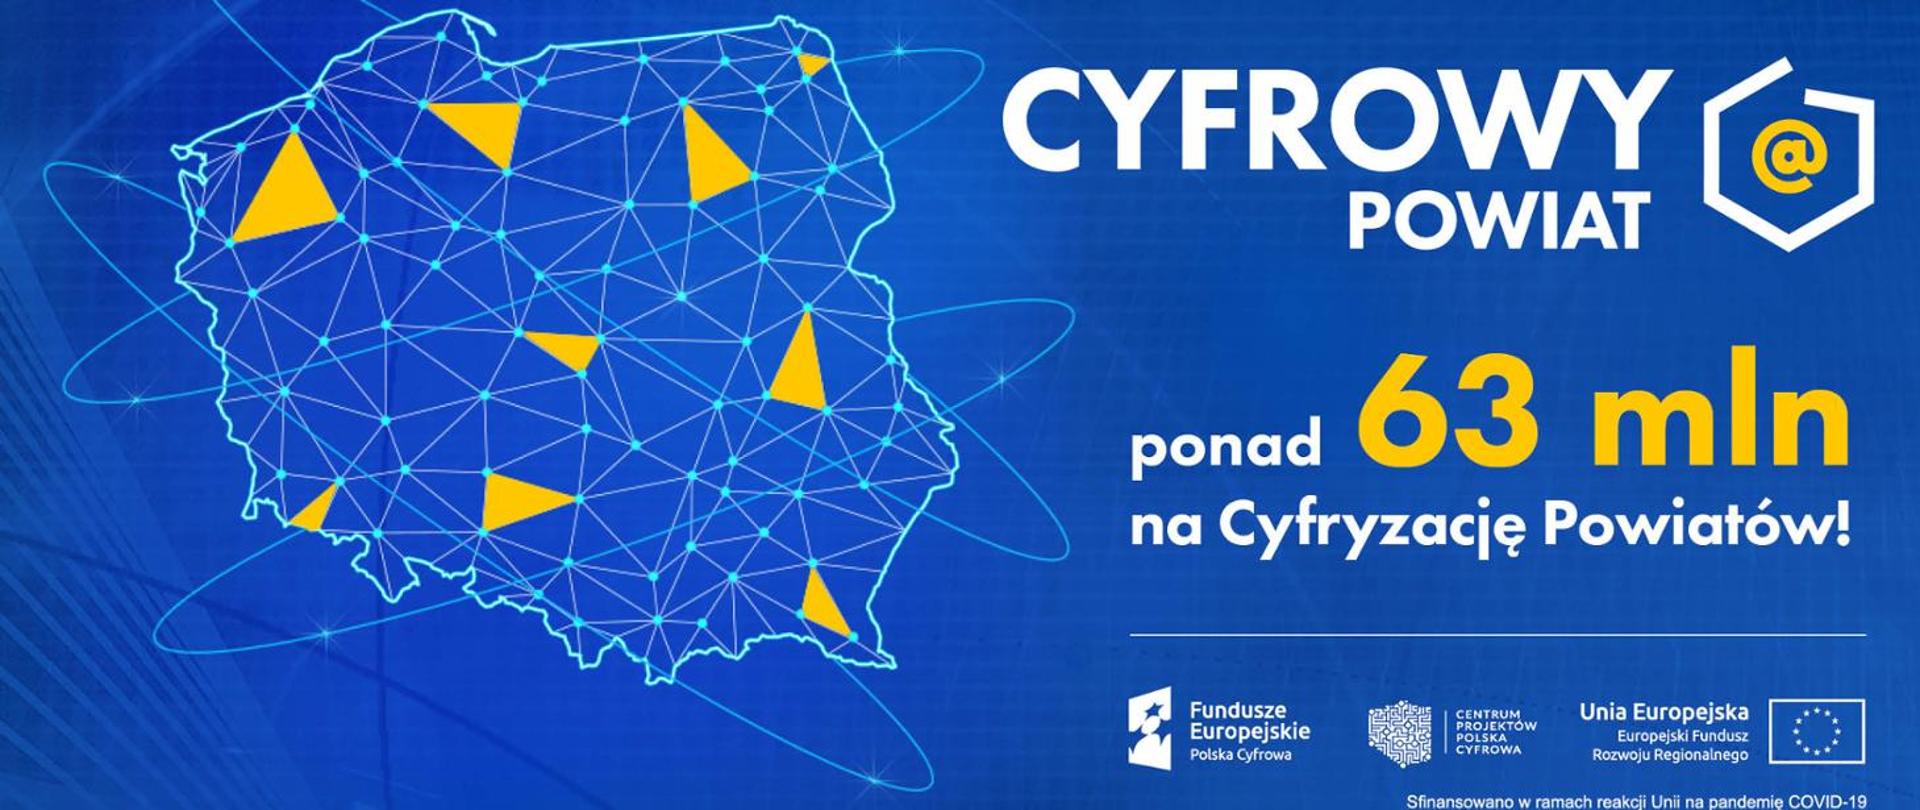 Start programu Cyfrowy Powiat 